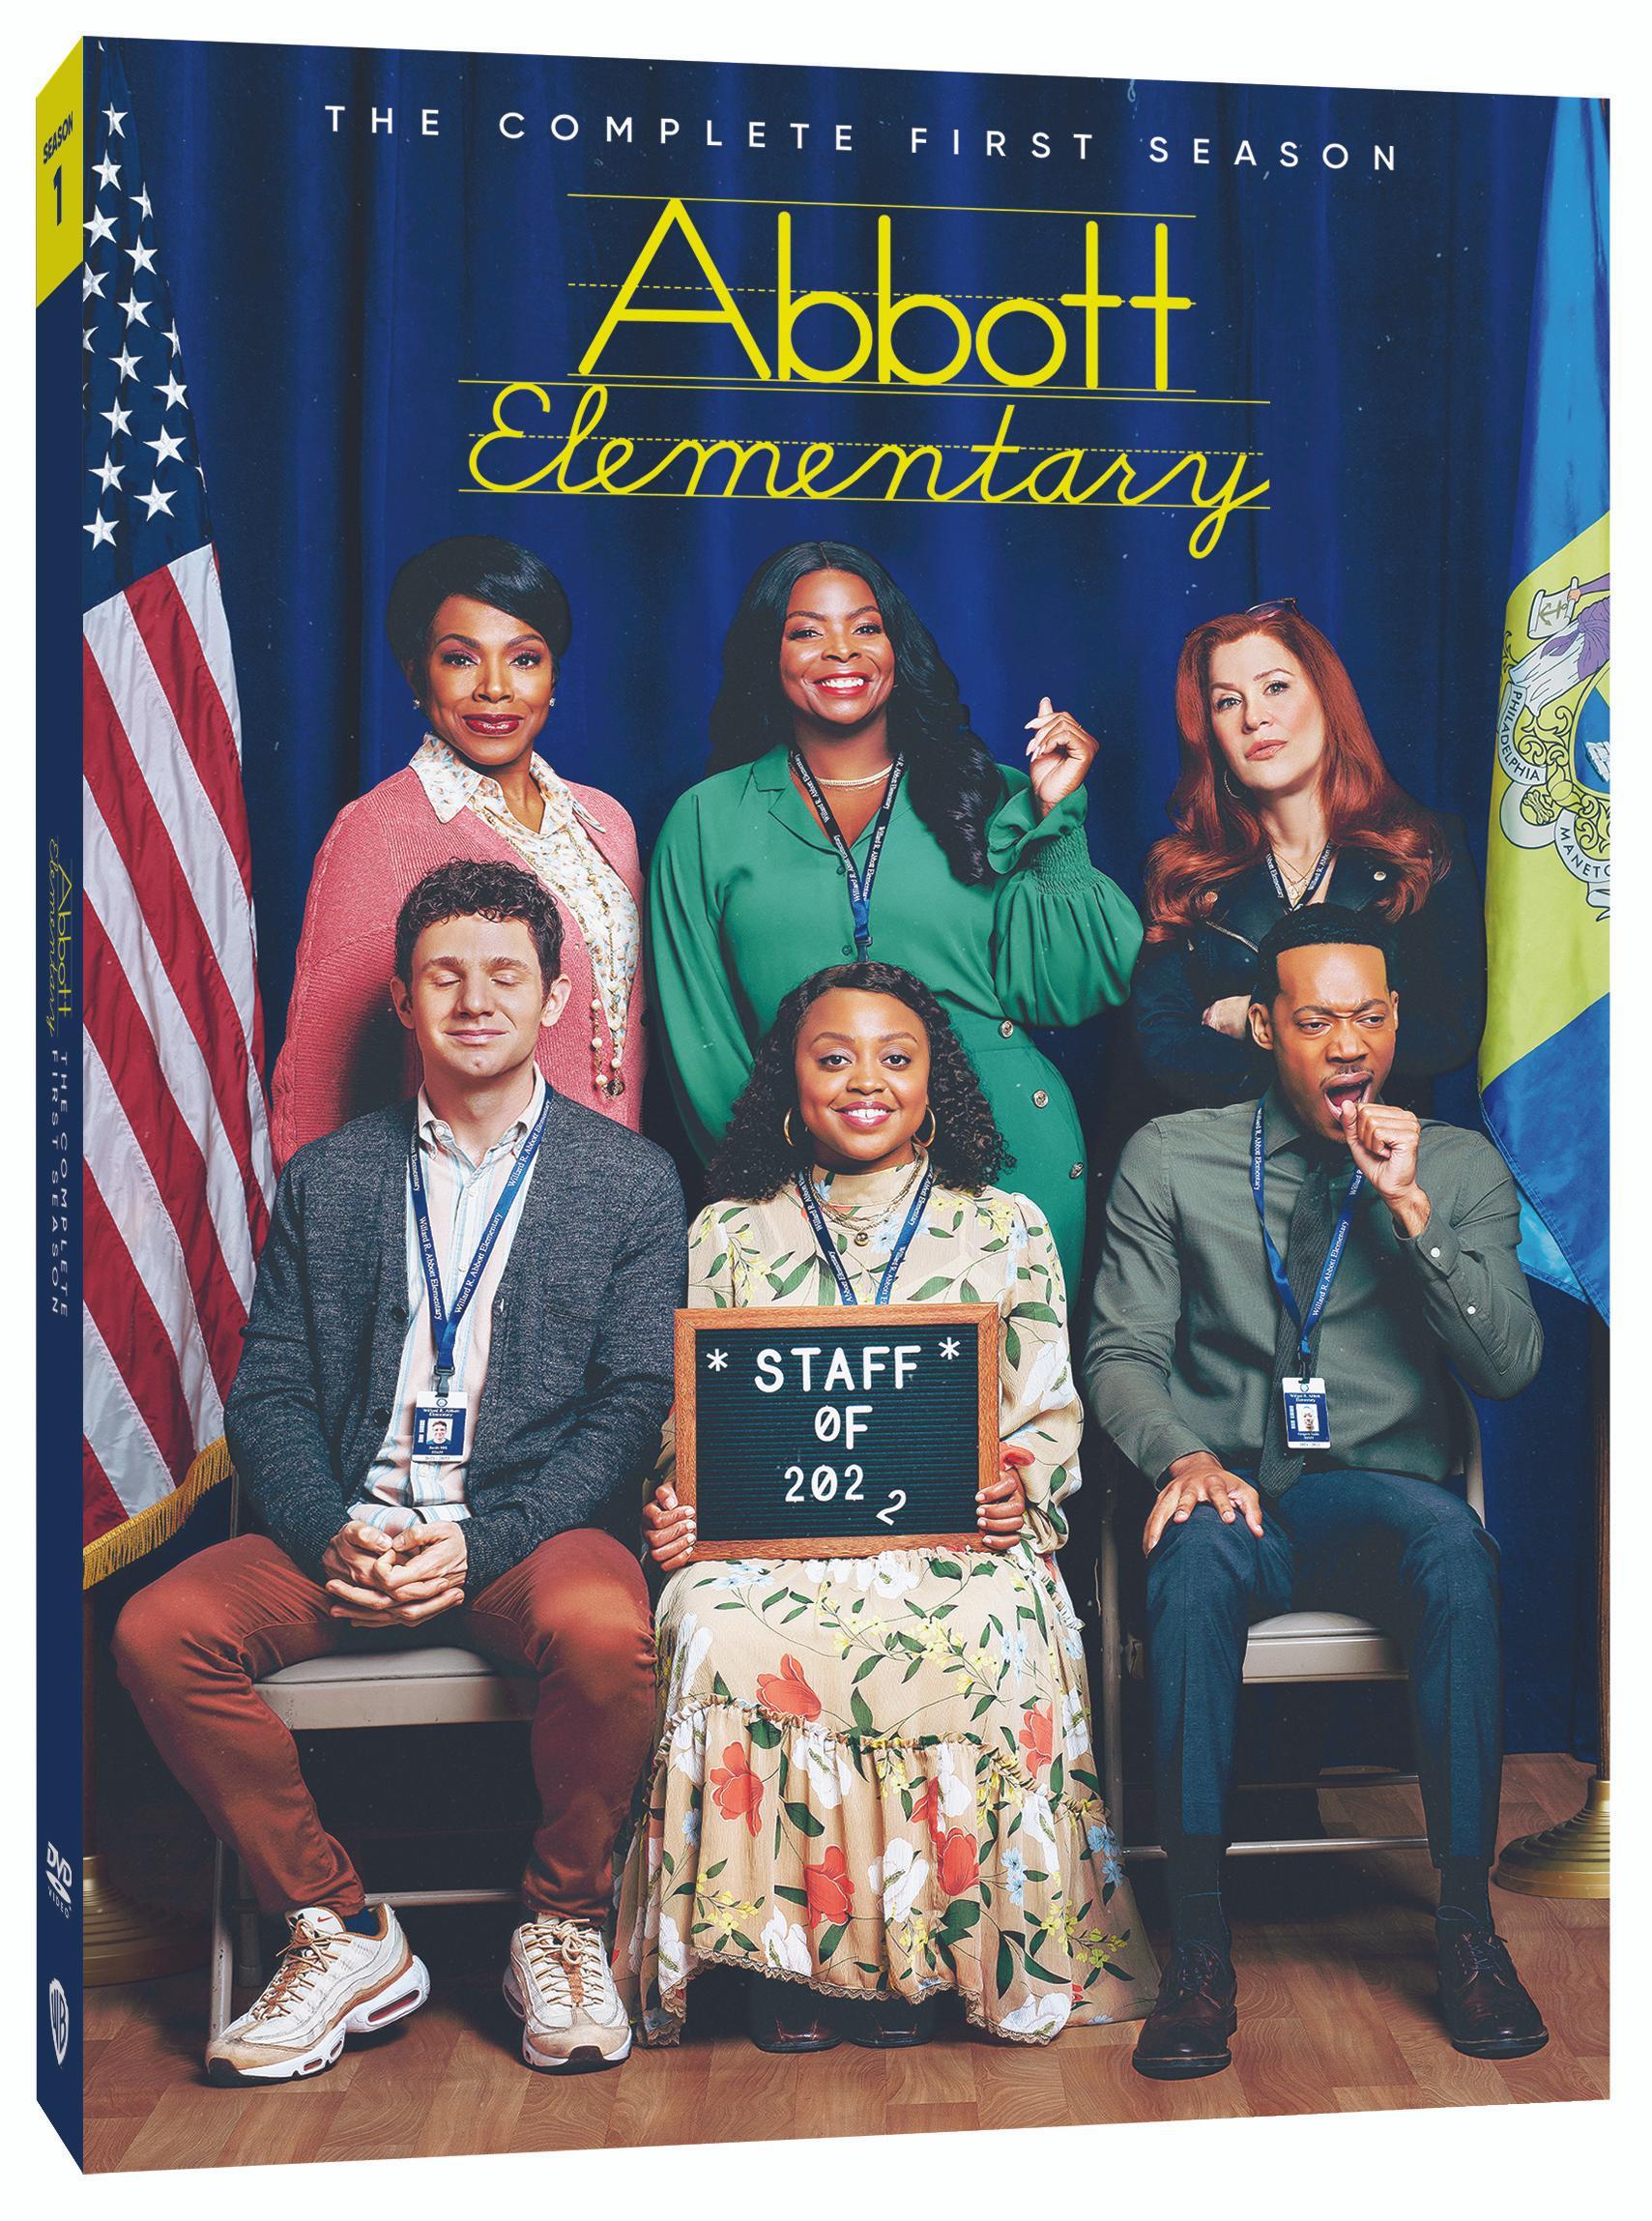 Abbott Elementary S1 DVD Box Art1